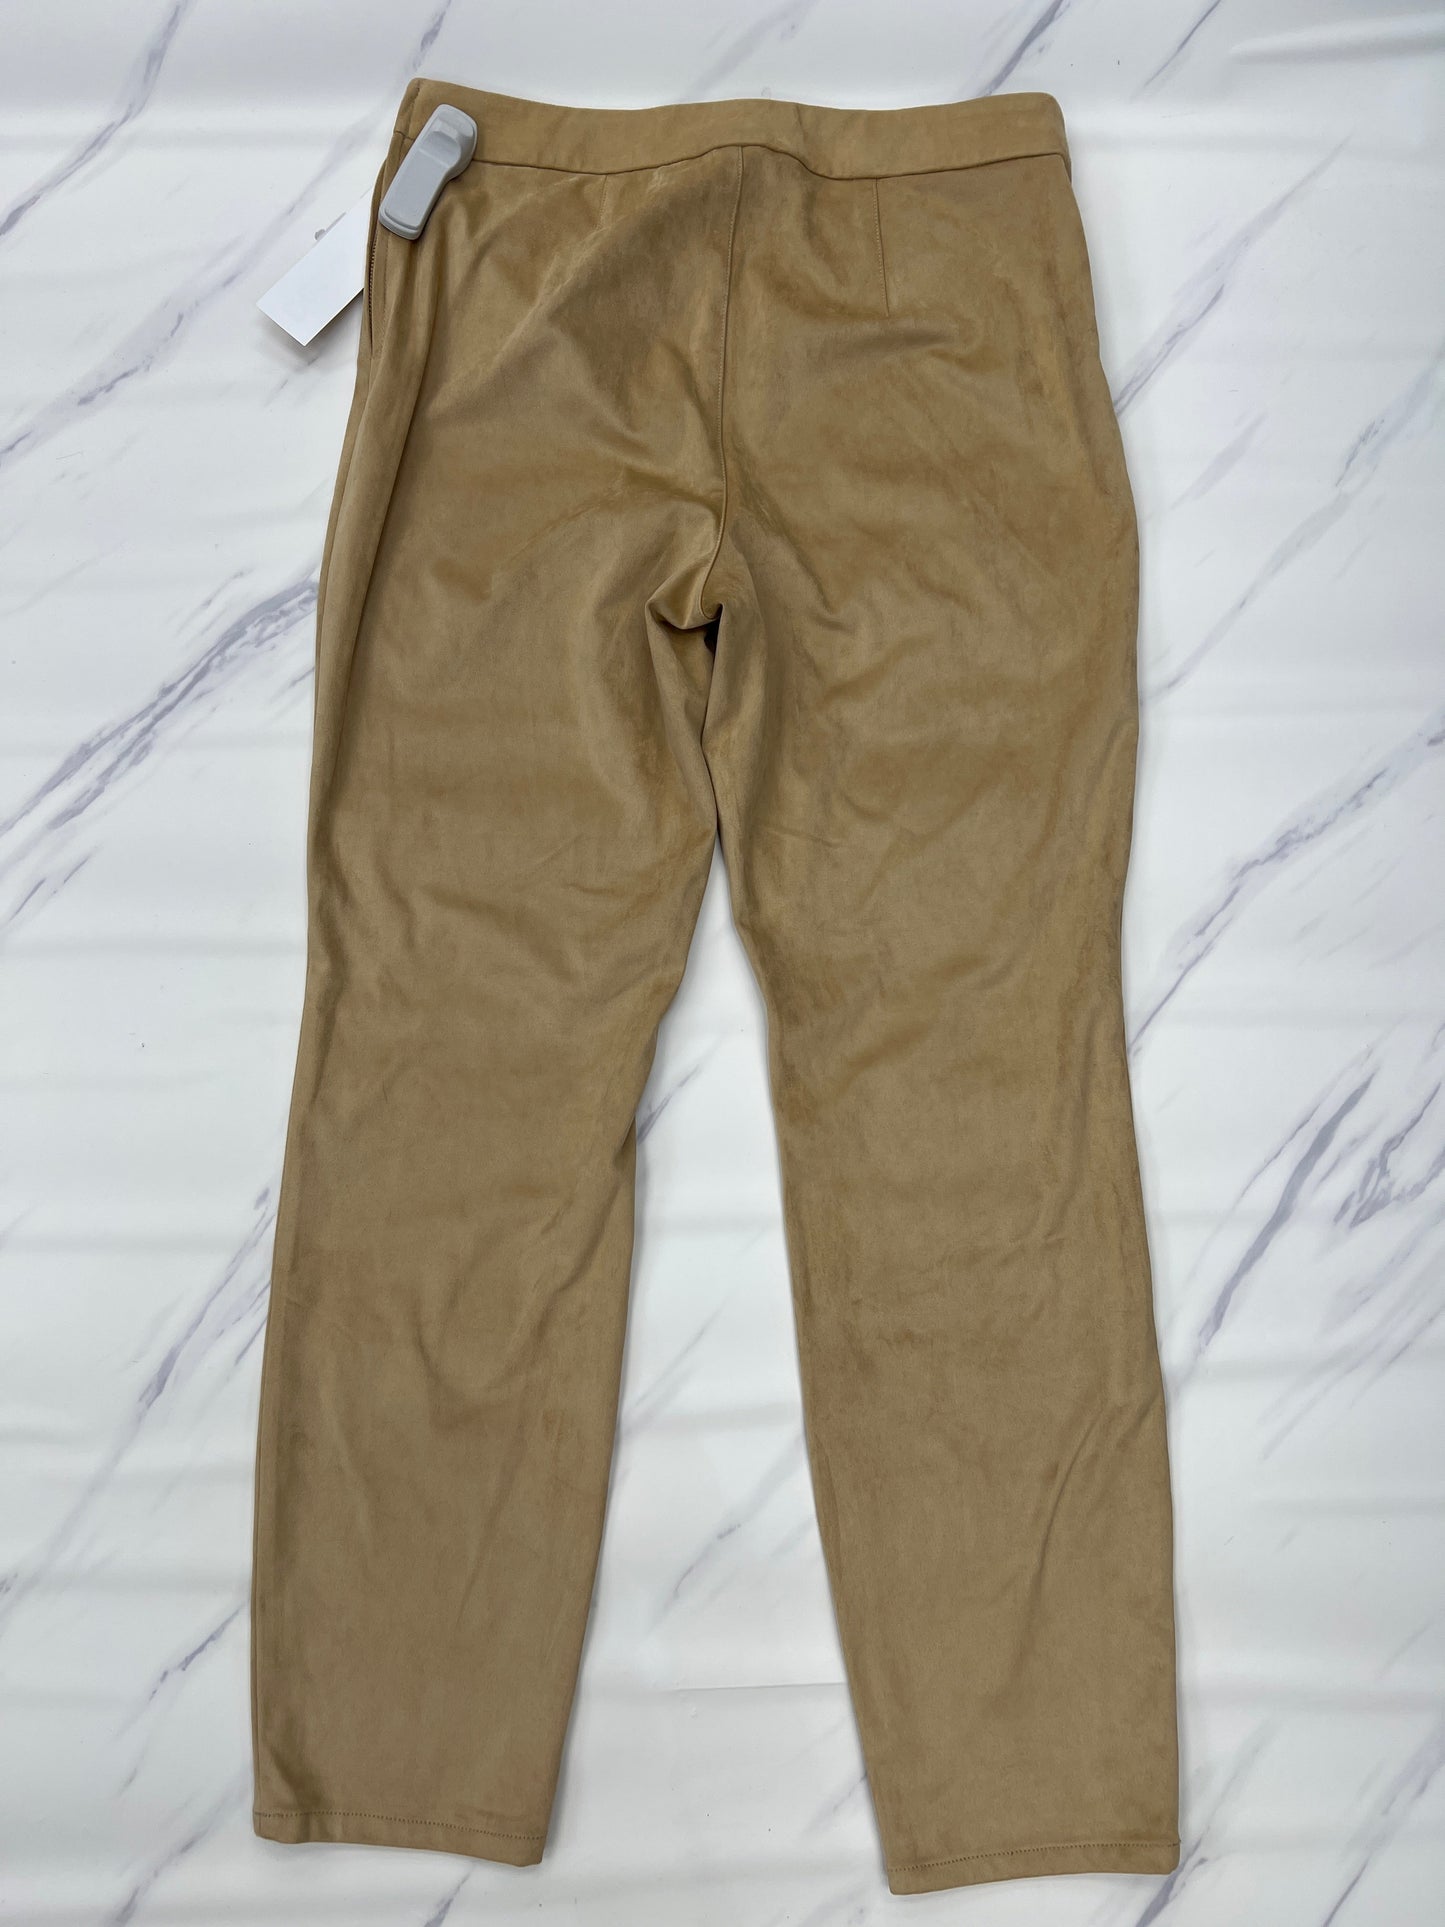 Tan Pants Designer Tommy Bahama, Size 6